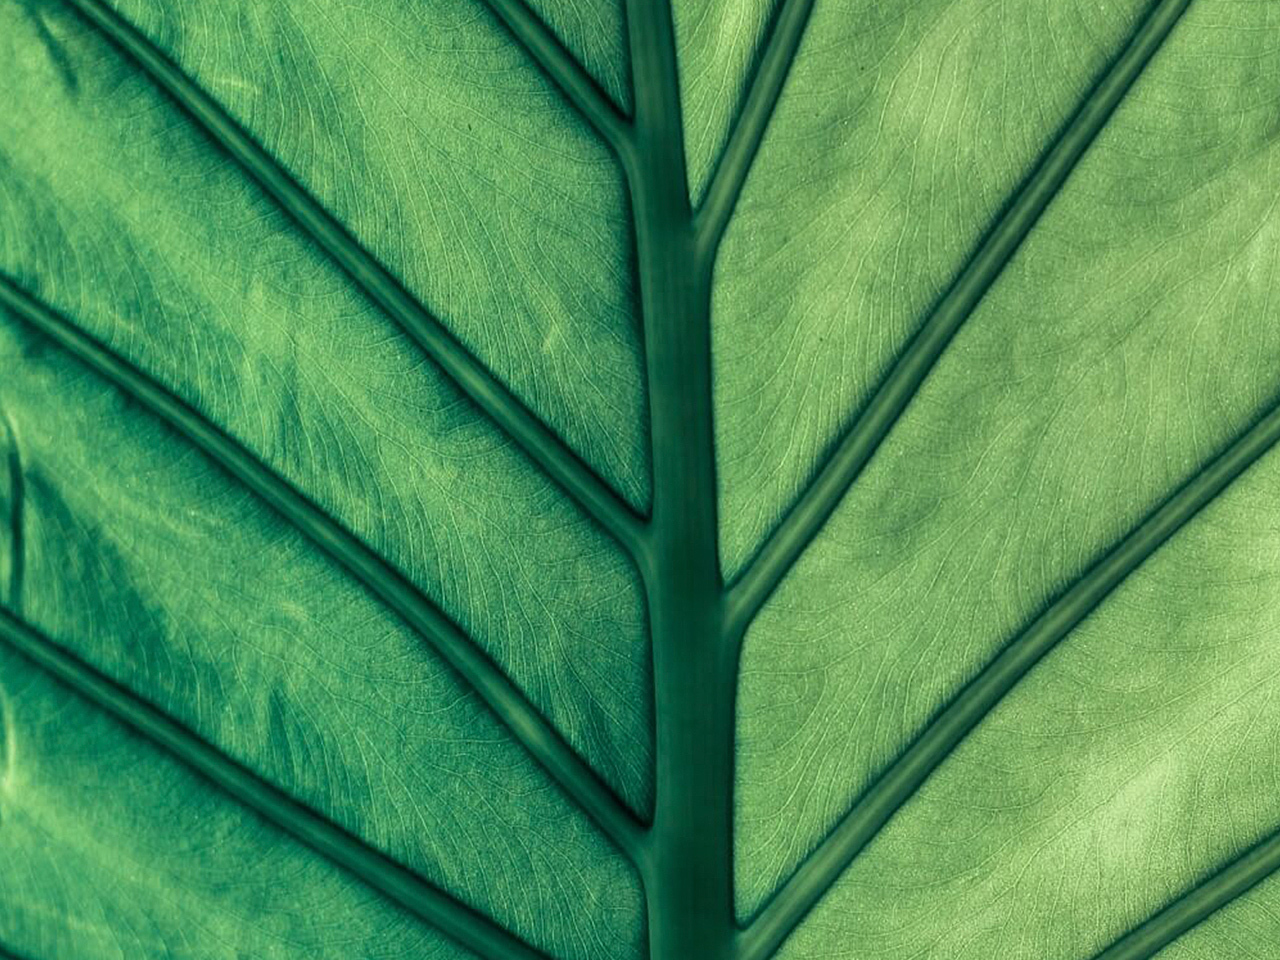 Leaf close up